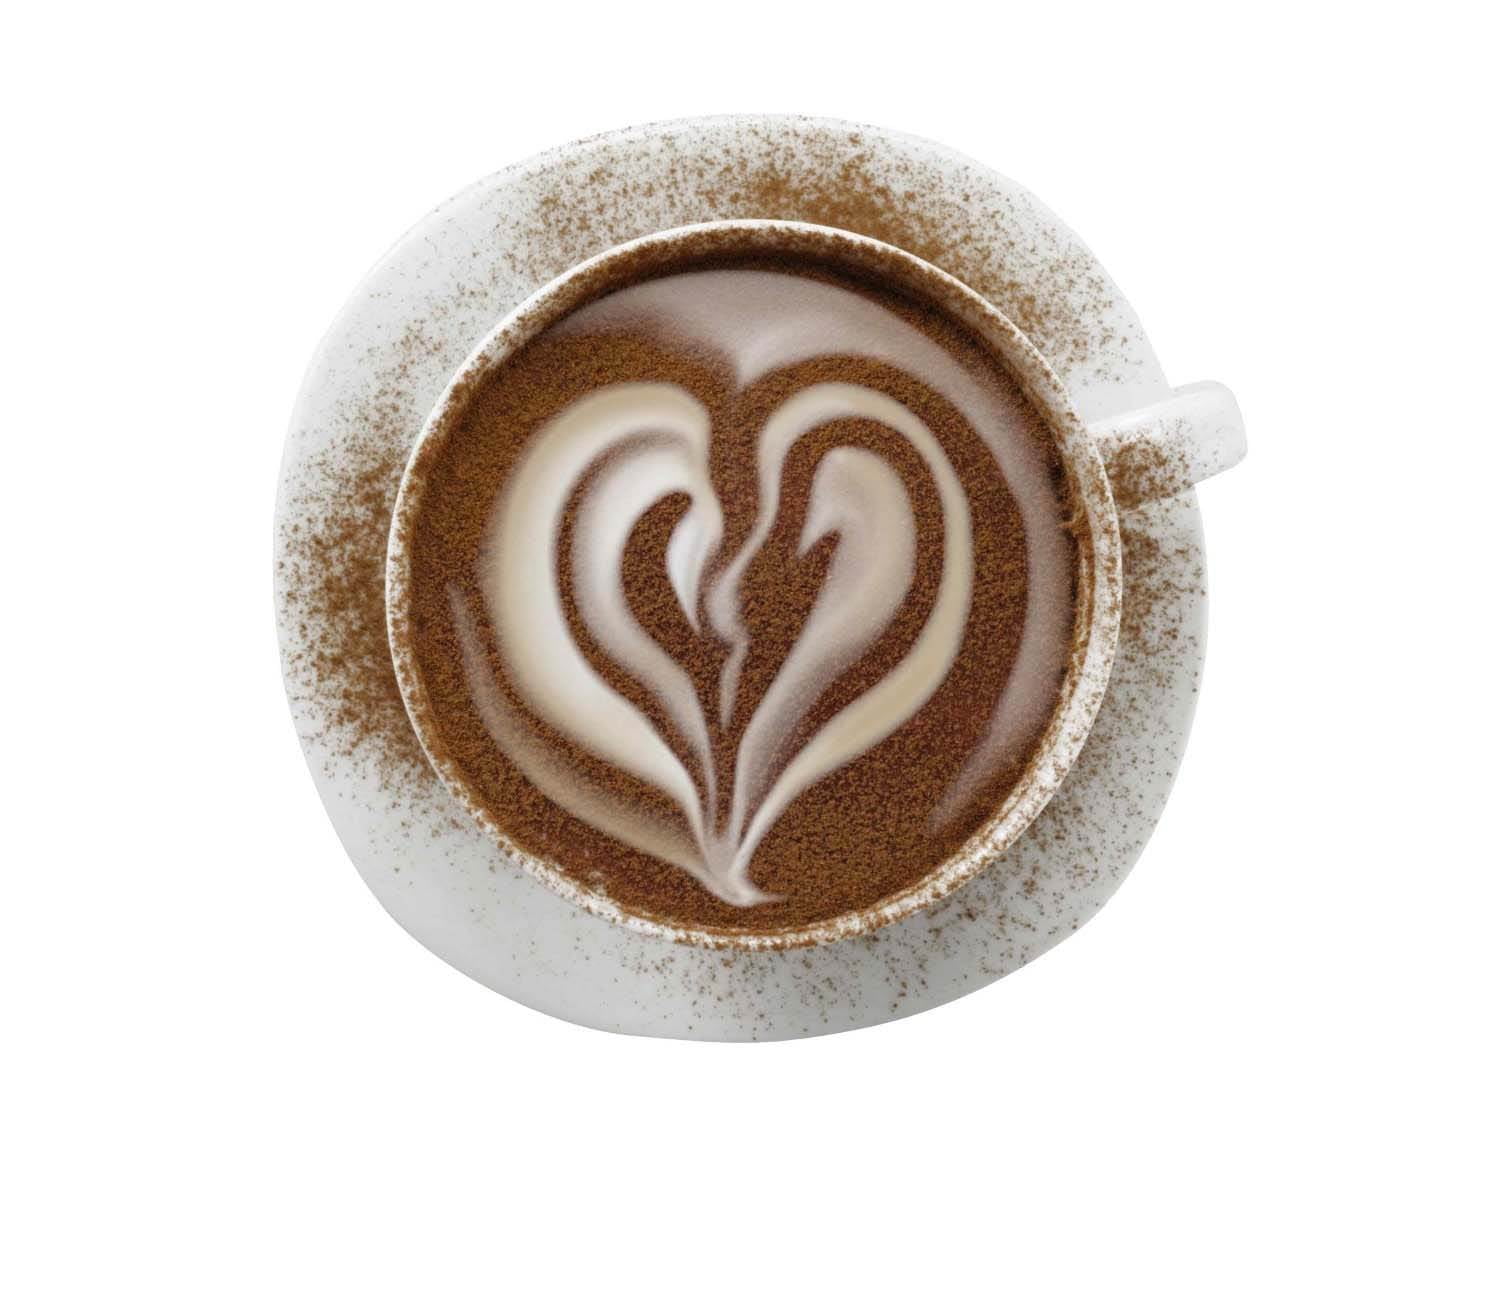 Mr. Coffee Cafe Latte Maker Coffee Hot Chocolate Maker Model BVMC-EL1 Tested